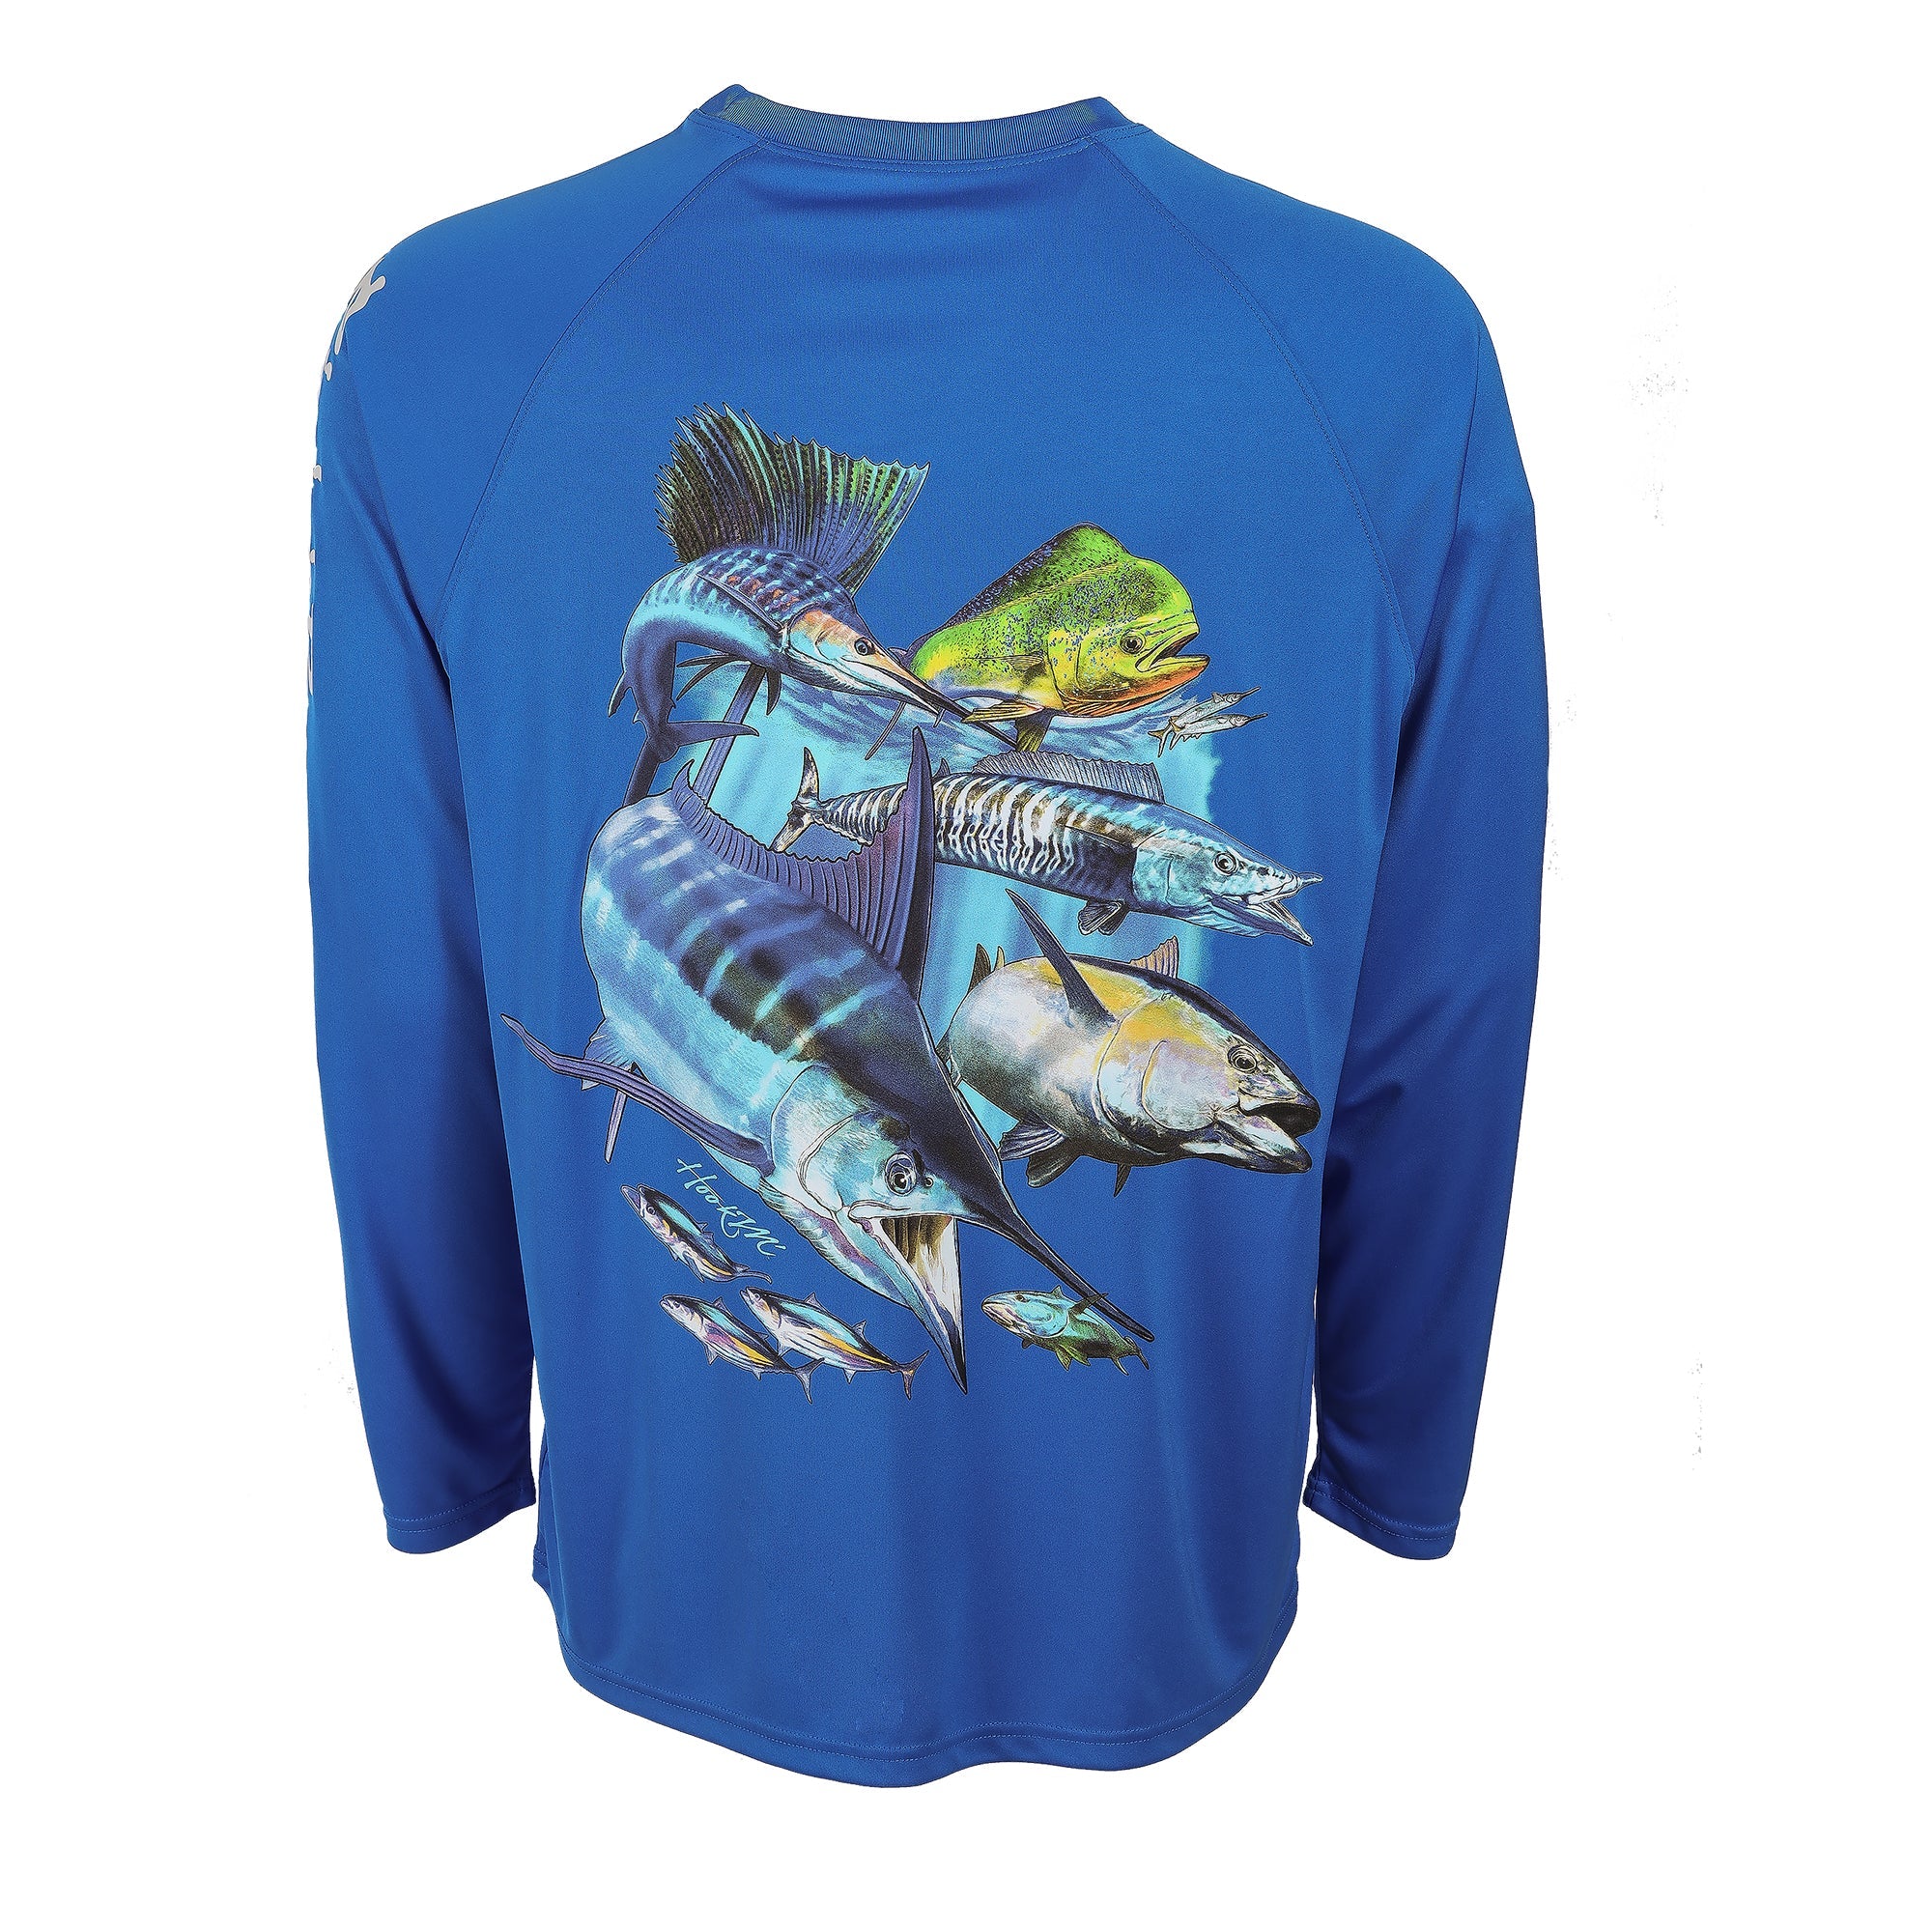 Bimini Bay Outfitters Hook M' Men's Long Sleeve Shirt - Big Game Species